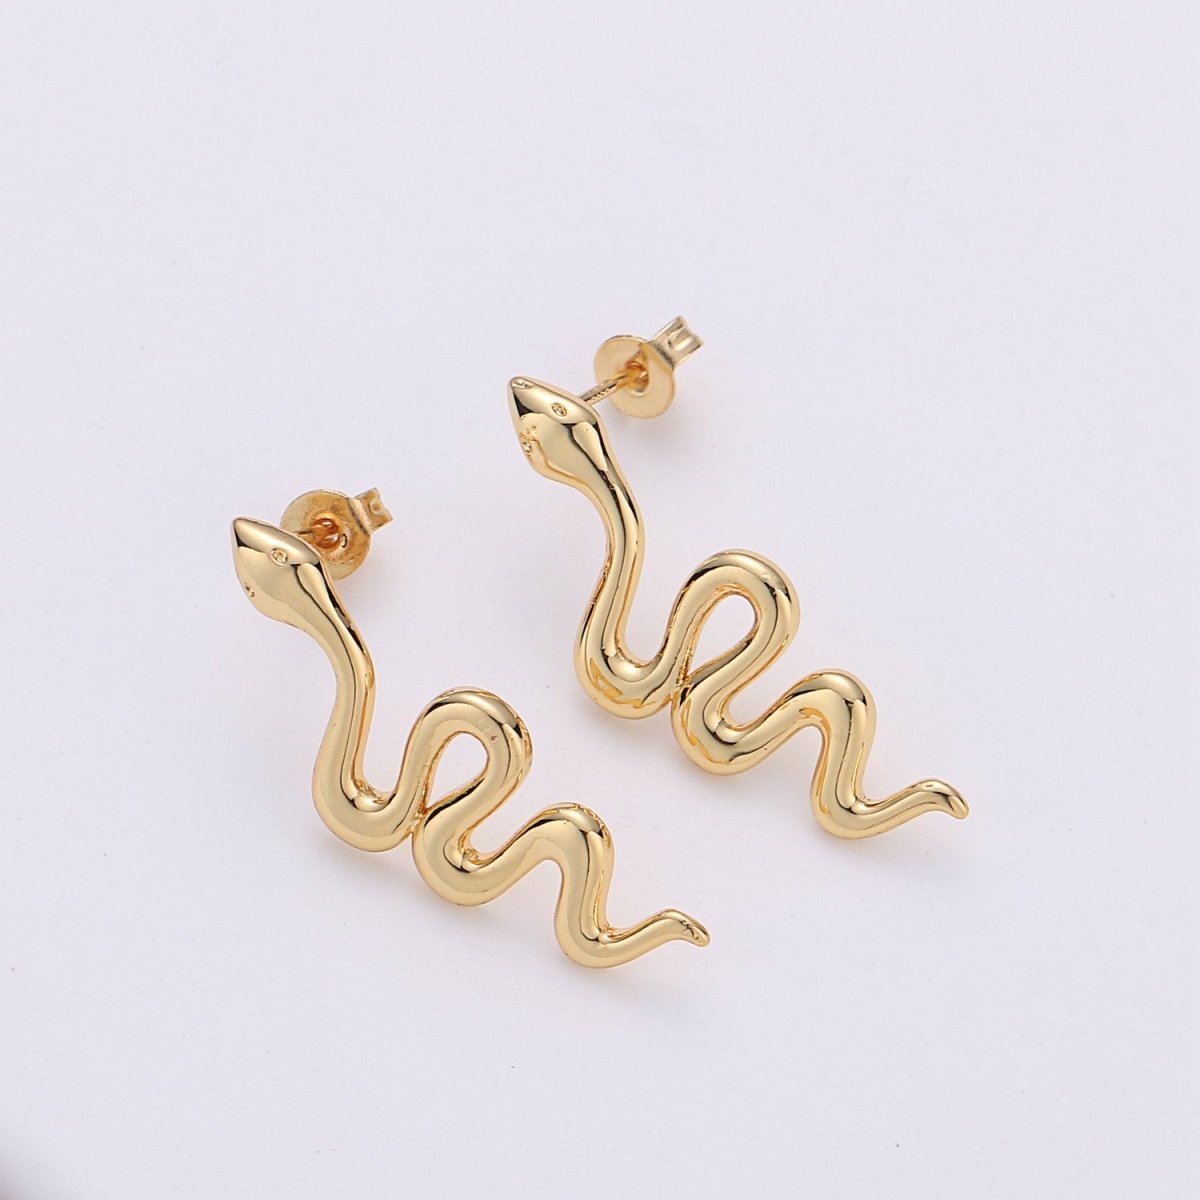 Overstock Gold Snake earrings, snake stud earrings, dainty earrings, Serpent earrings, delicate studs, gold earrings, minimalist earring K-542 - DLUXCA